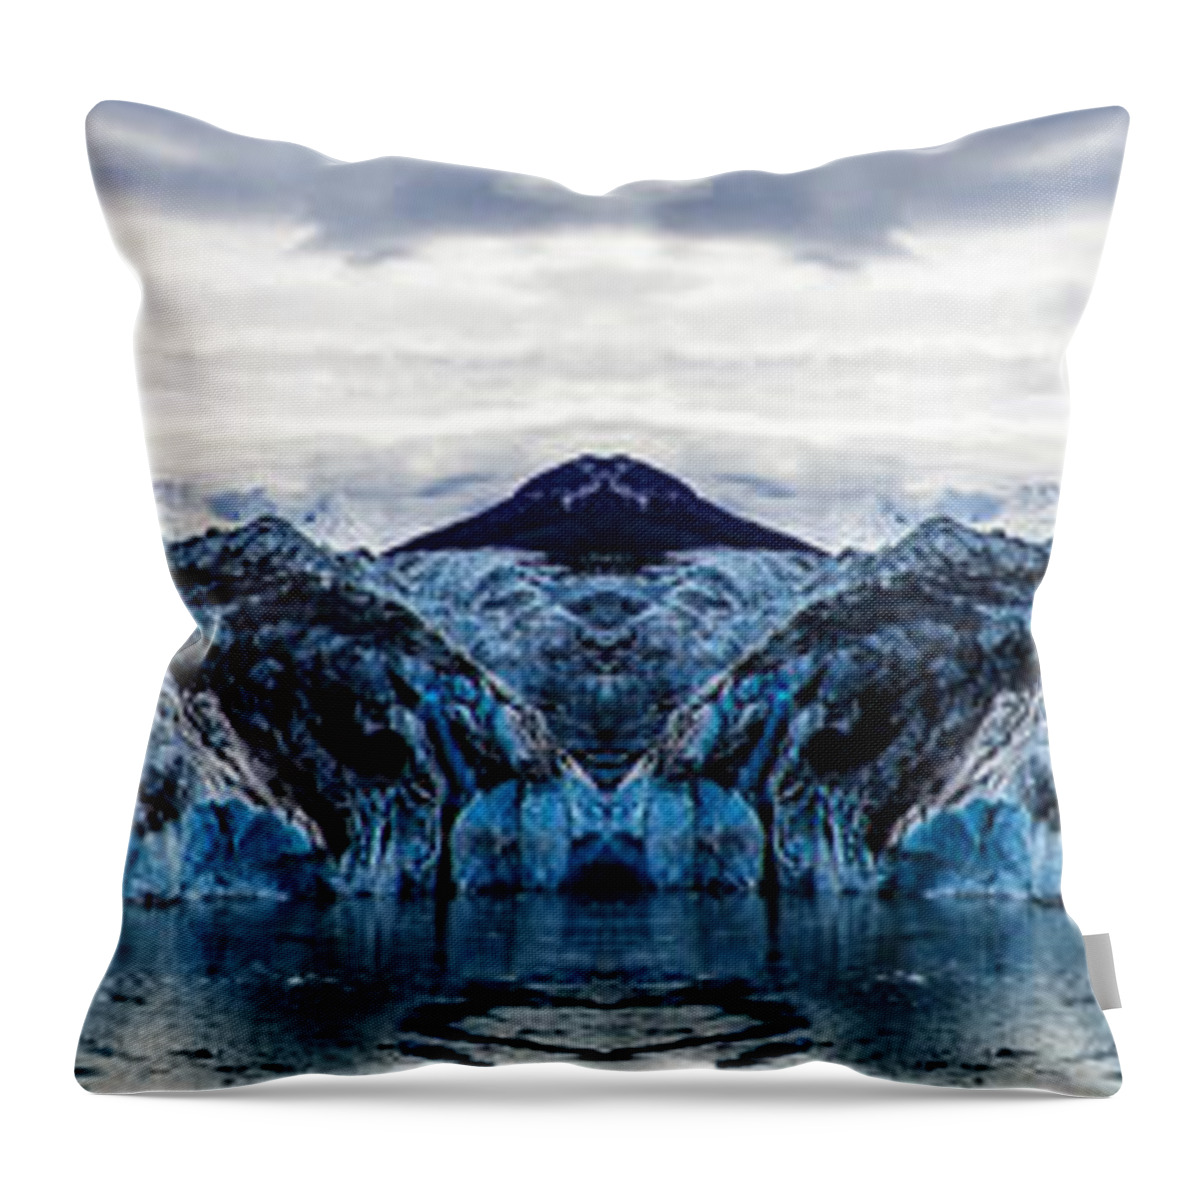 Mountains Throw Pillow featuring the digital art Knik Glacier Reflection by Pelo Blanco Photo